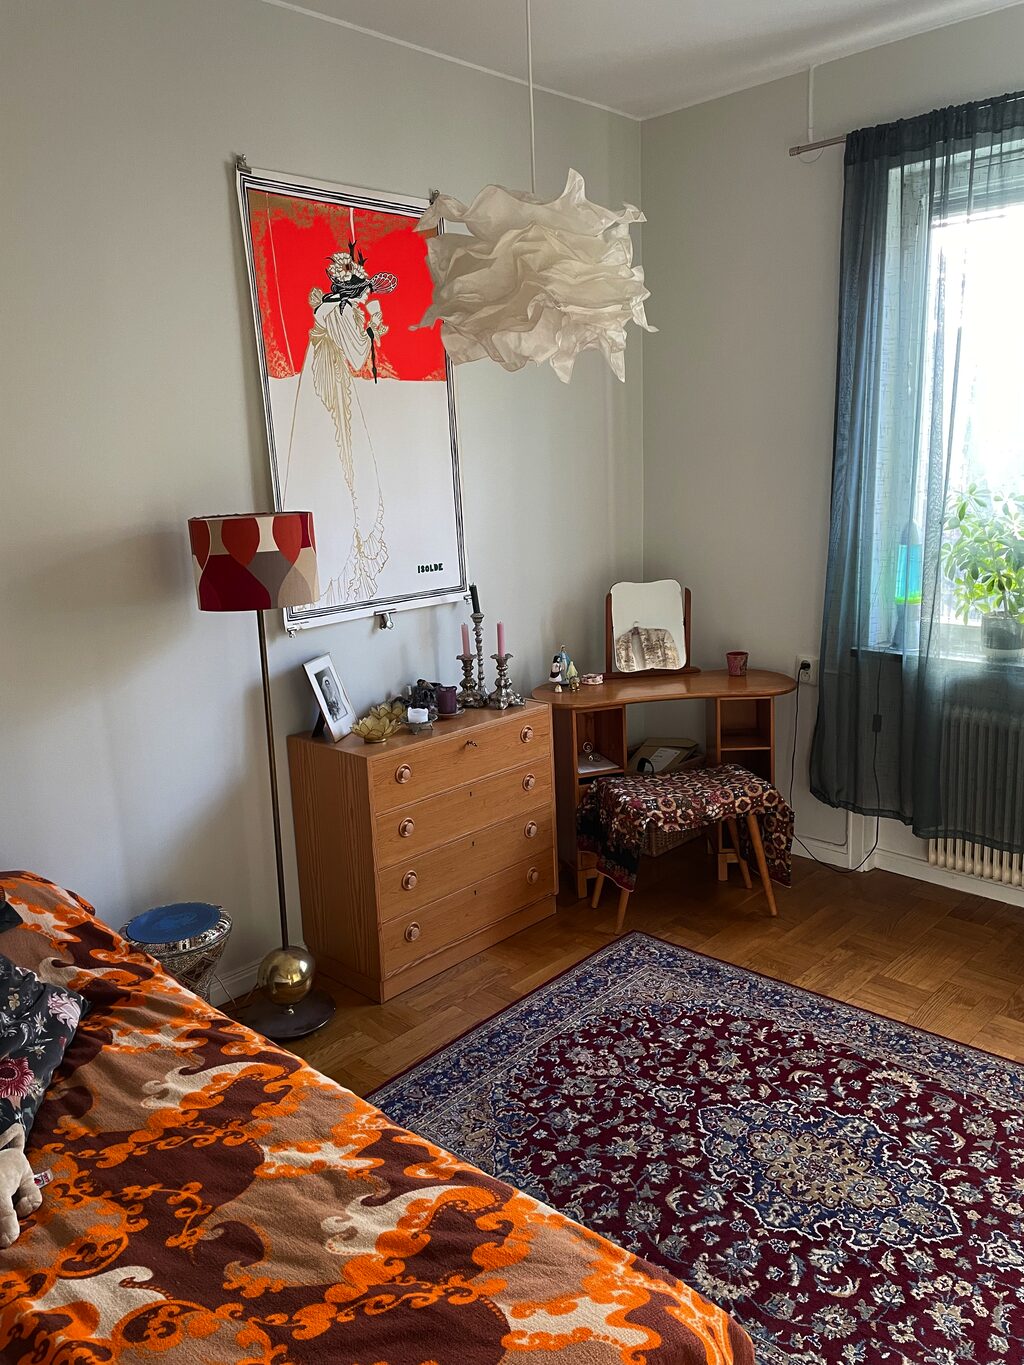 Lägenhetsbyte - Fredsgatan 3, 172 33 Sundbyberg